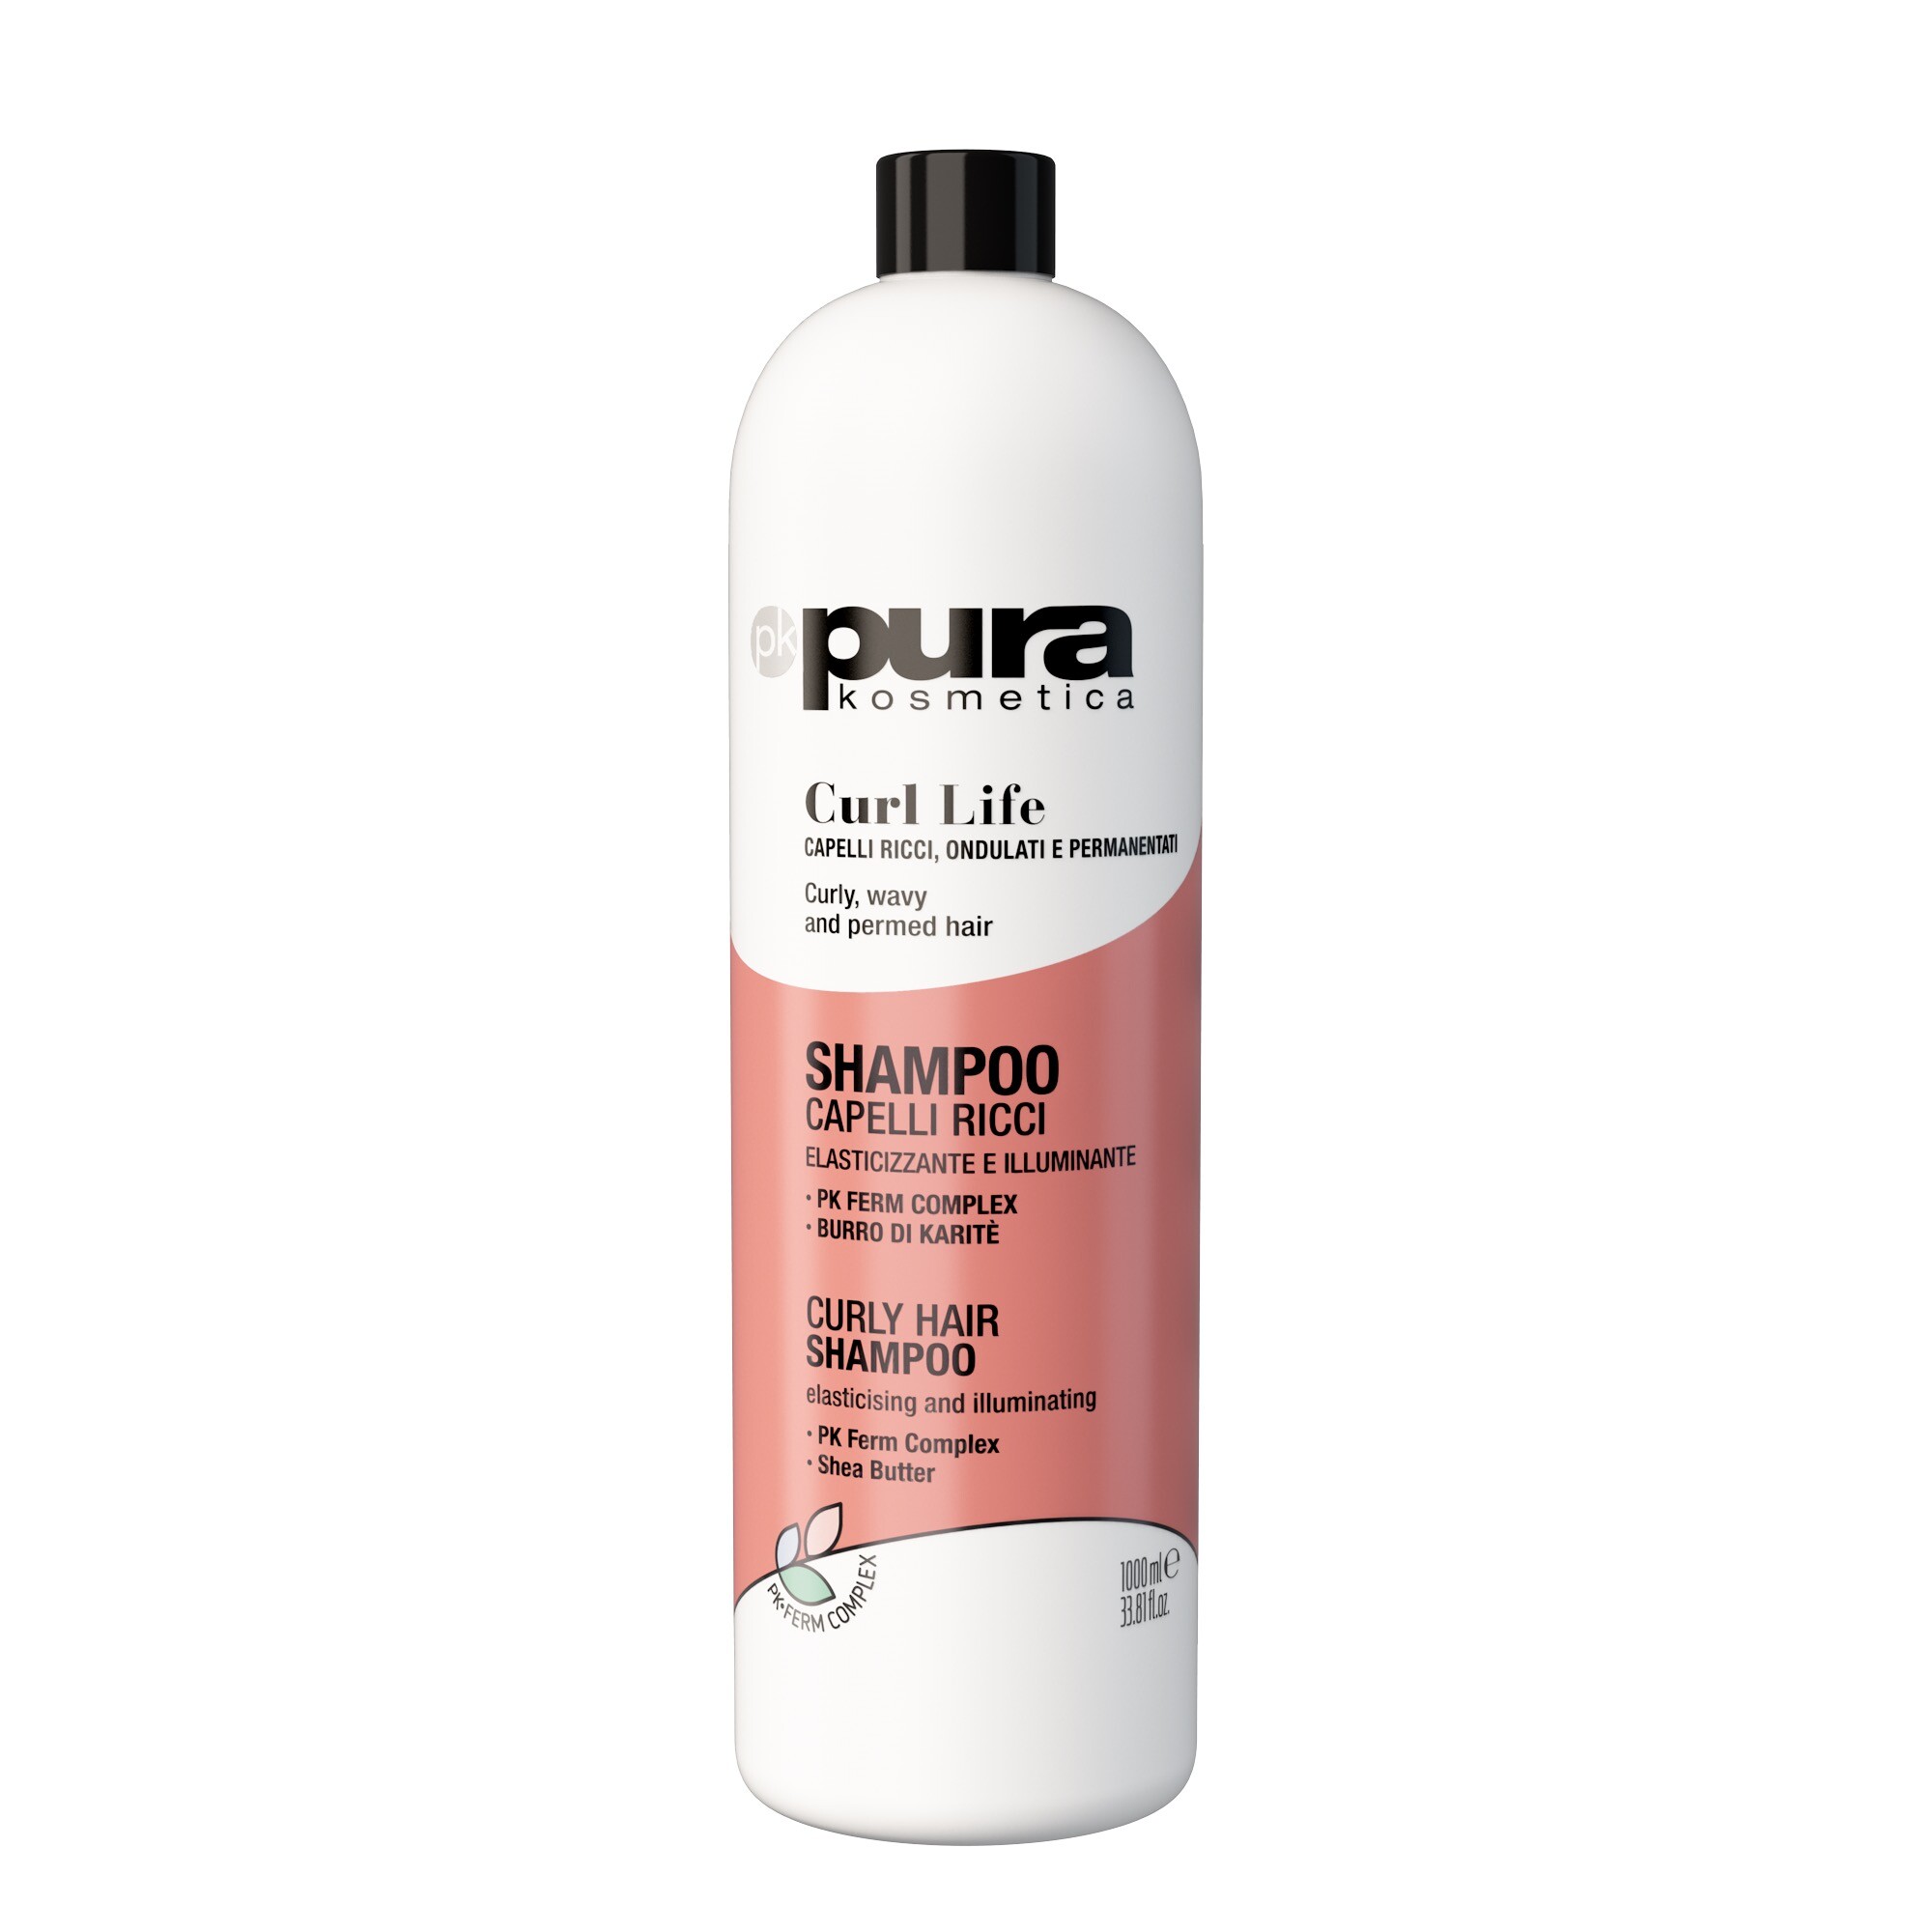 Pura Kosmetica Curl Life Shampoo 1000ml